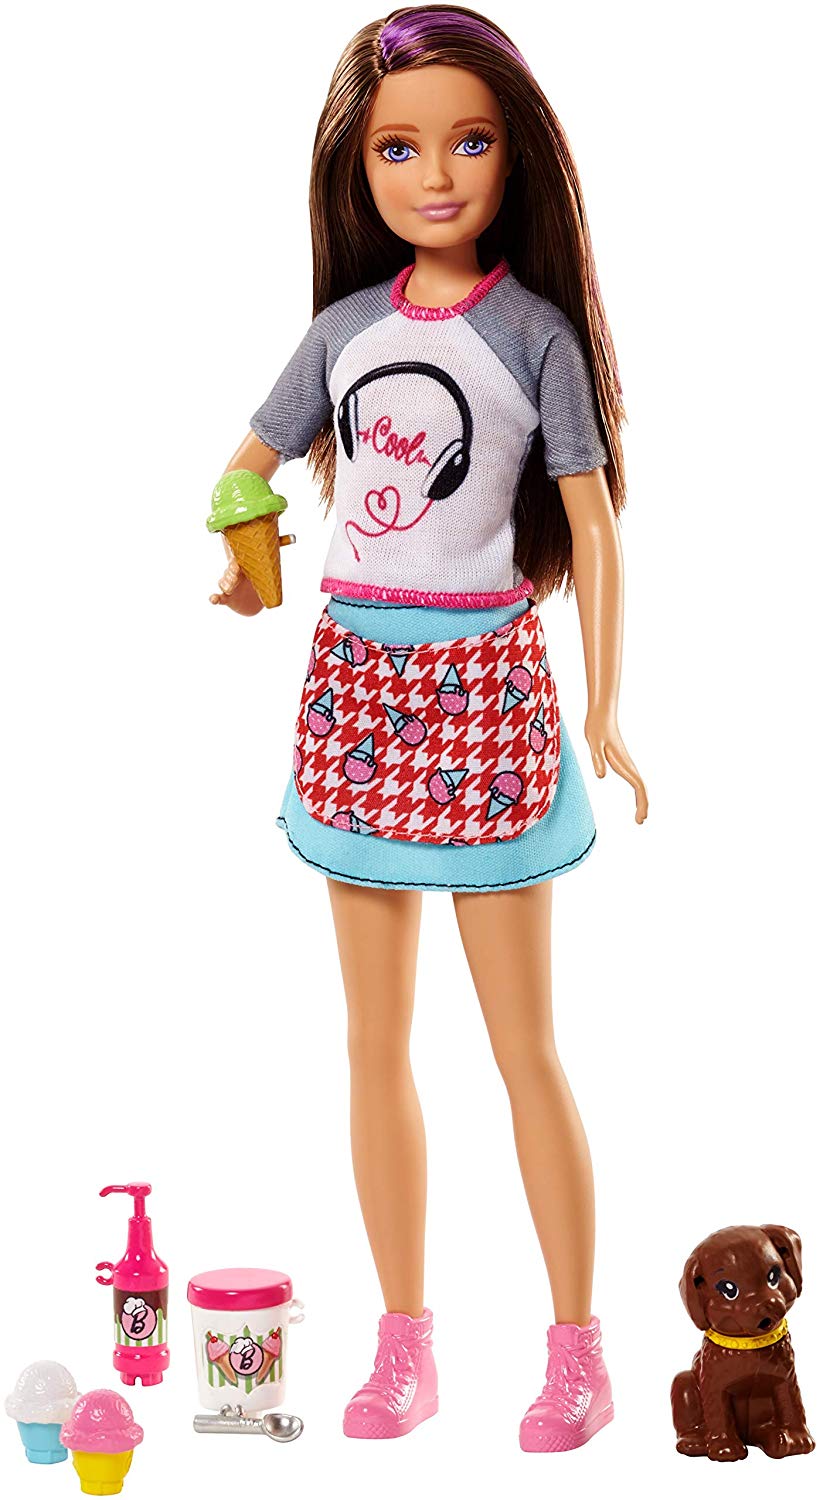 Mattel Barbie Fhp62 Cooking & Baking Skipper Doll & Accessories